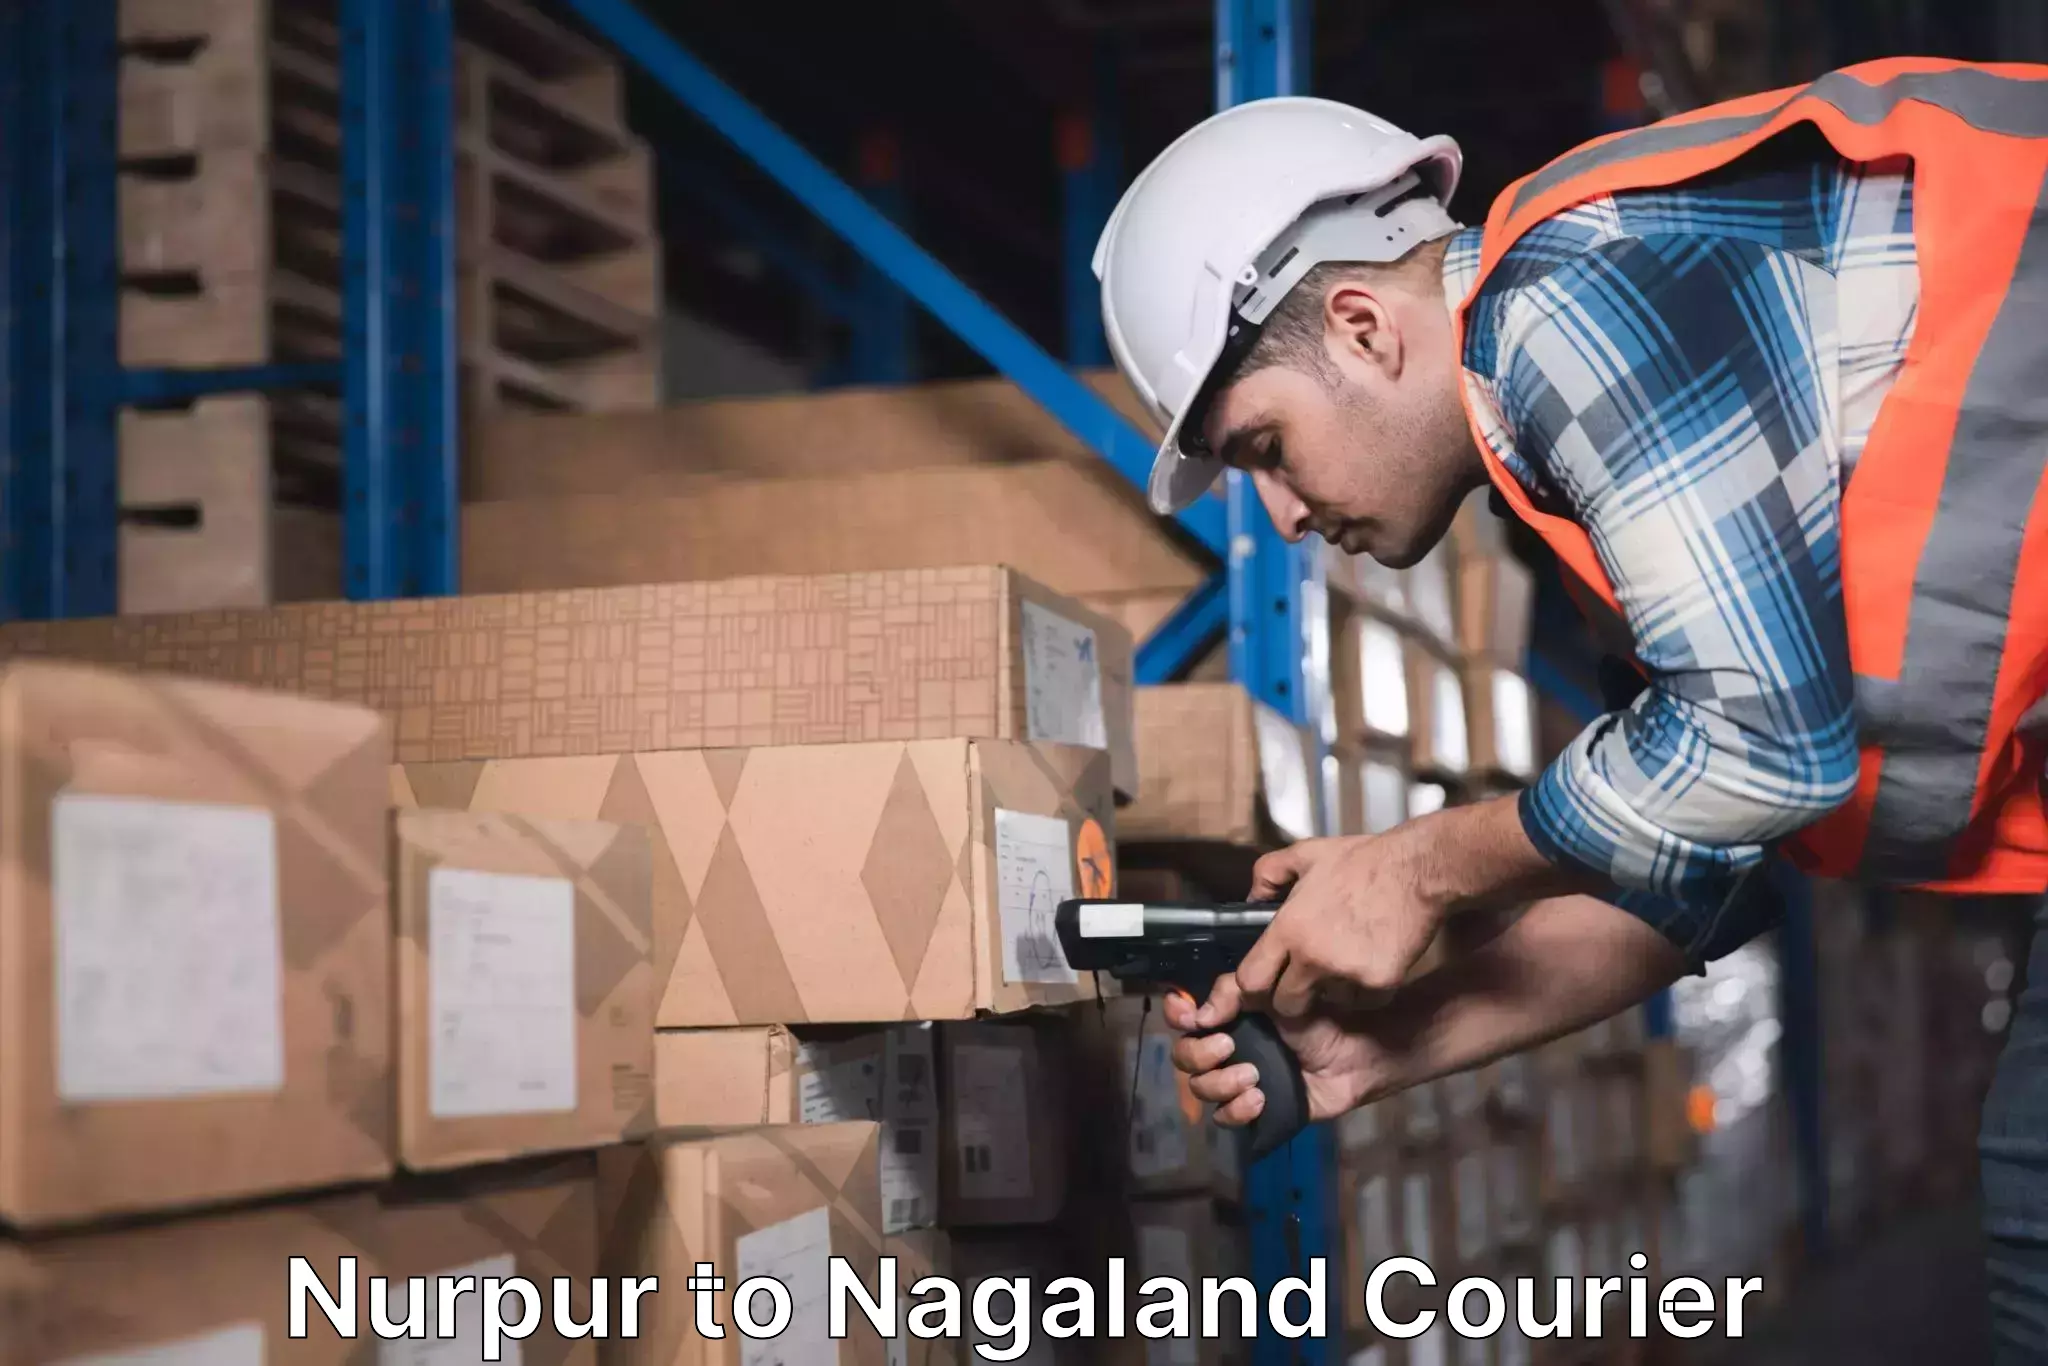 On-call courier service Nurpur to Dimapur